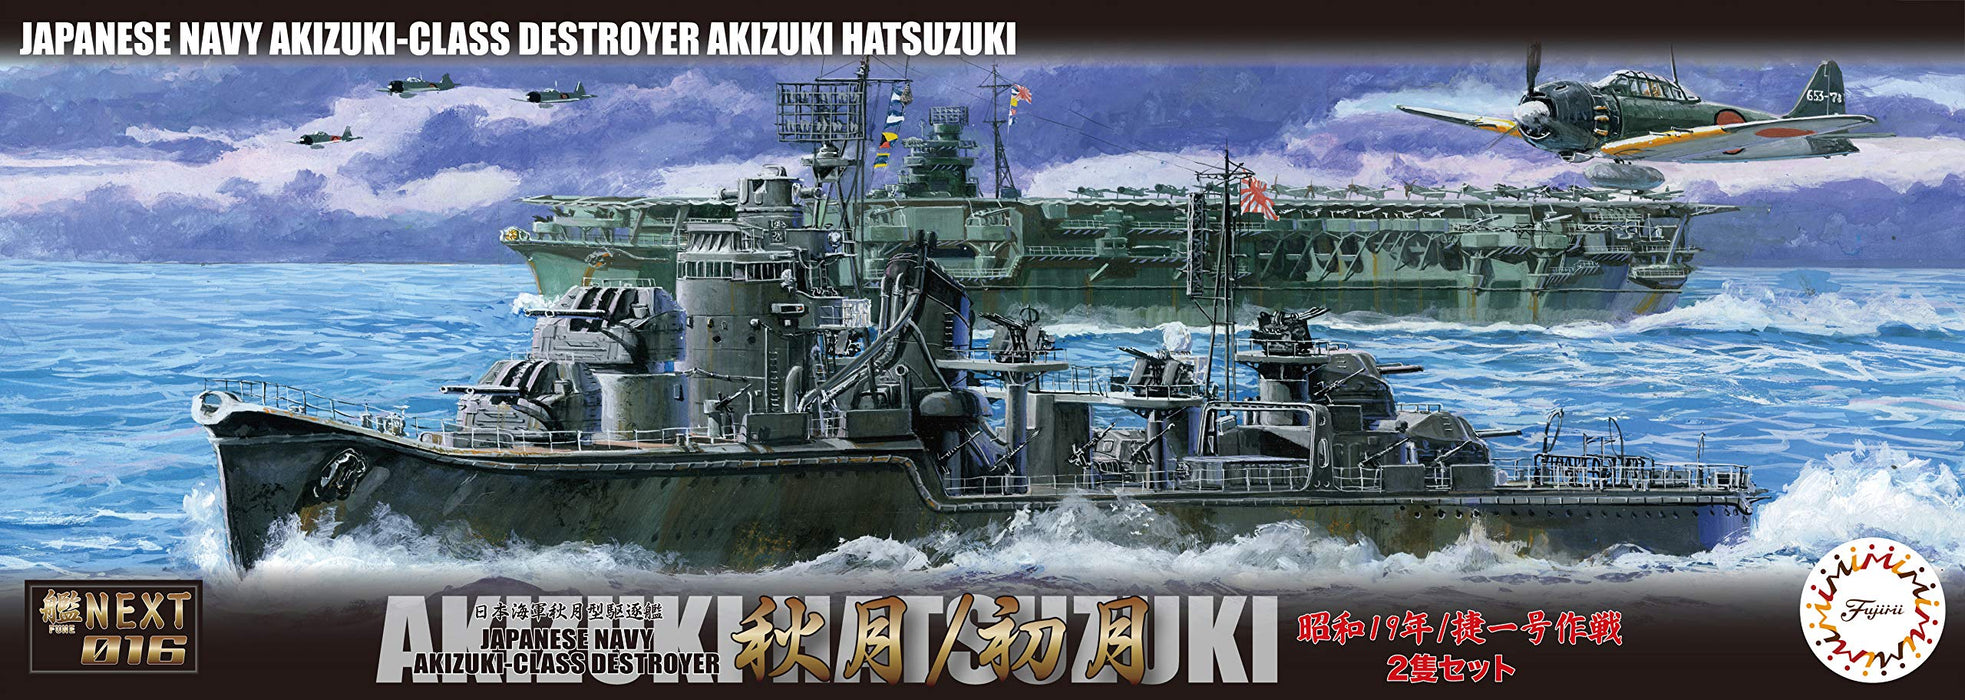 Fujimi Model 1/700 Ship Next Series No.16 Japanese Navy Akizuki Destroyer Akizuki/First Month Showa 19/Sho Ichigo Operation Color Coded Plastic Model Ship Nx16